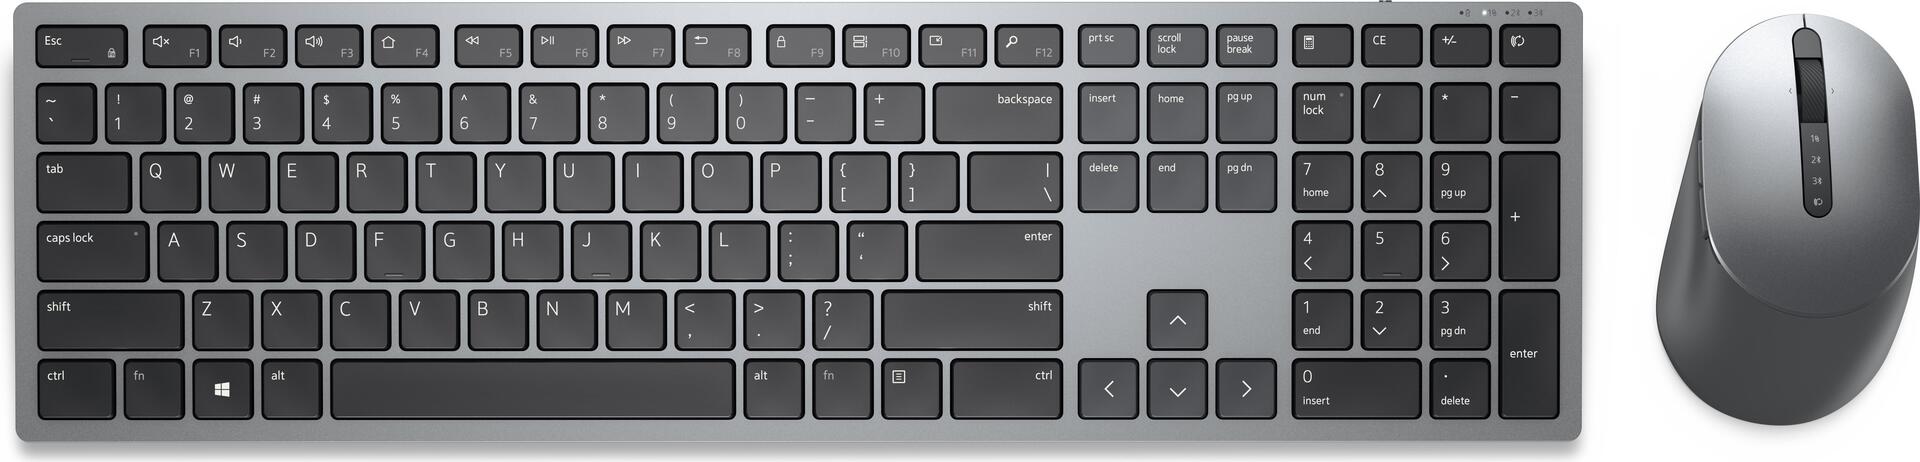 DELL KM7321W. Tastatur Formfaktor: Full-size (100%). Tastatur-Stil: Gerade. Geräteschnittstelle: RF Wireless + Bluetooth, Tastaturaufbau: QWERTY, Empfohlene Nutzung: Büro. Produktfarbe: Grau, Titan. Maus enthalten (KM7321WGY-NOR)